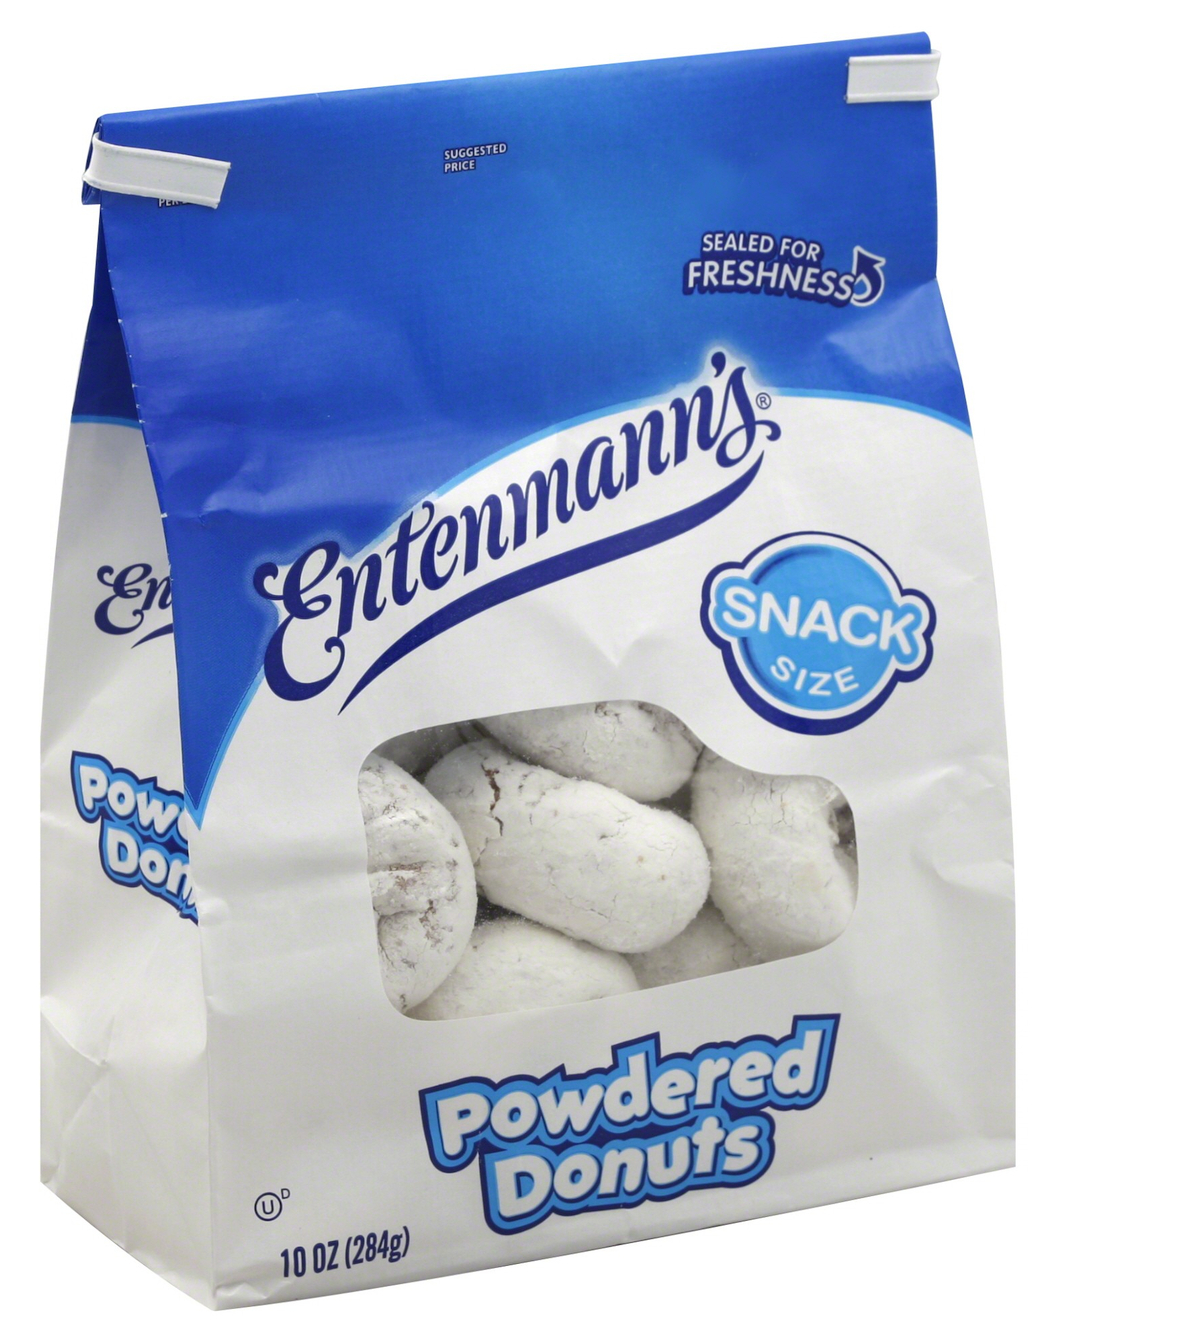 Entenmann's Snack Size Powdered Donuts